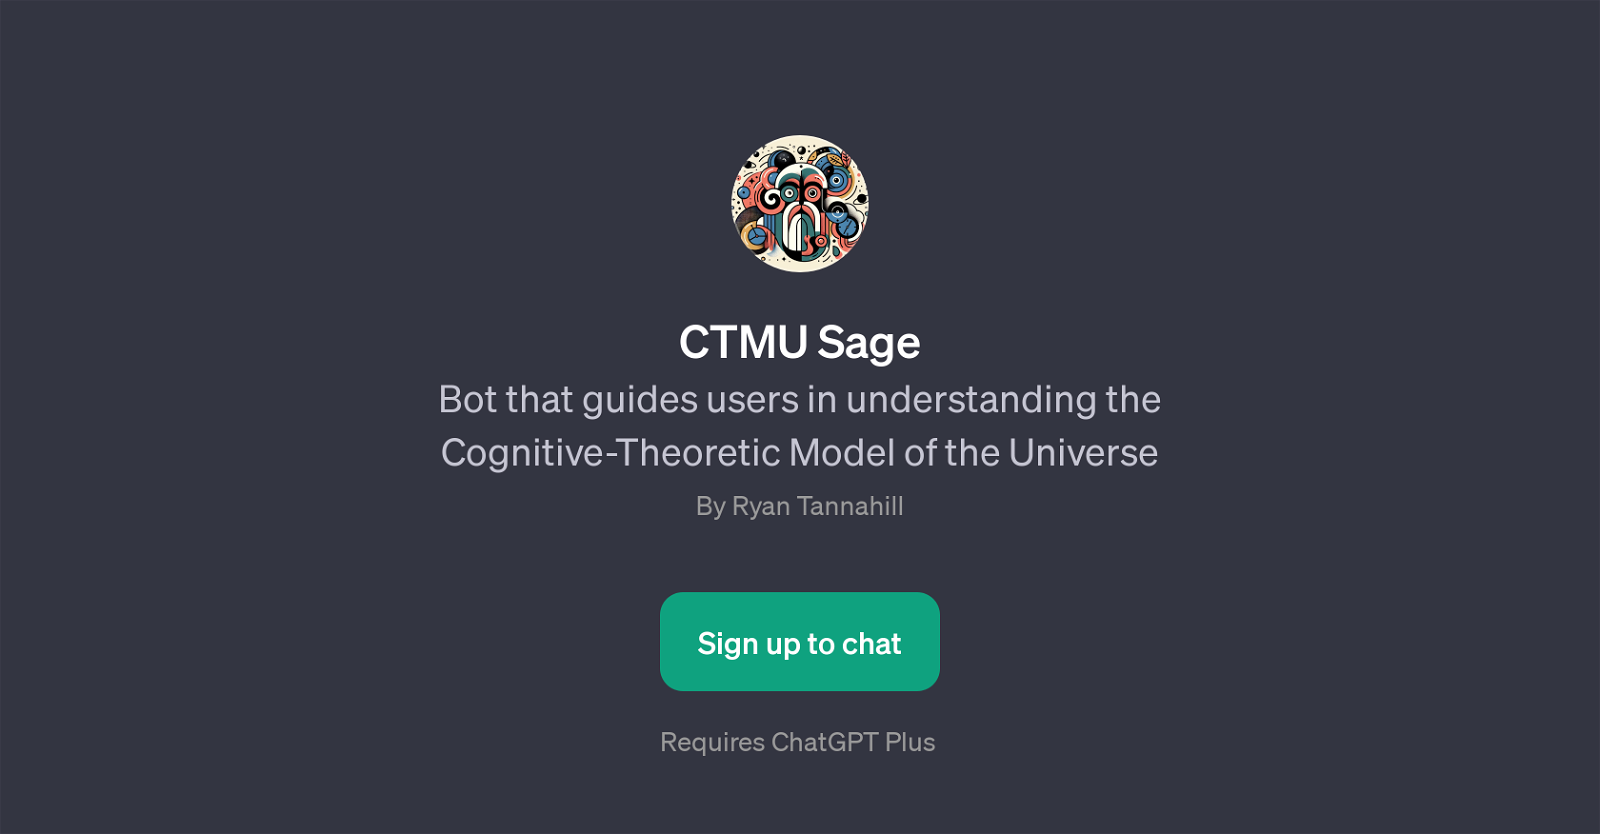 CTMU Sage website